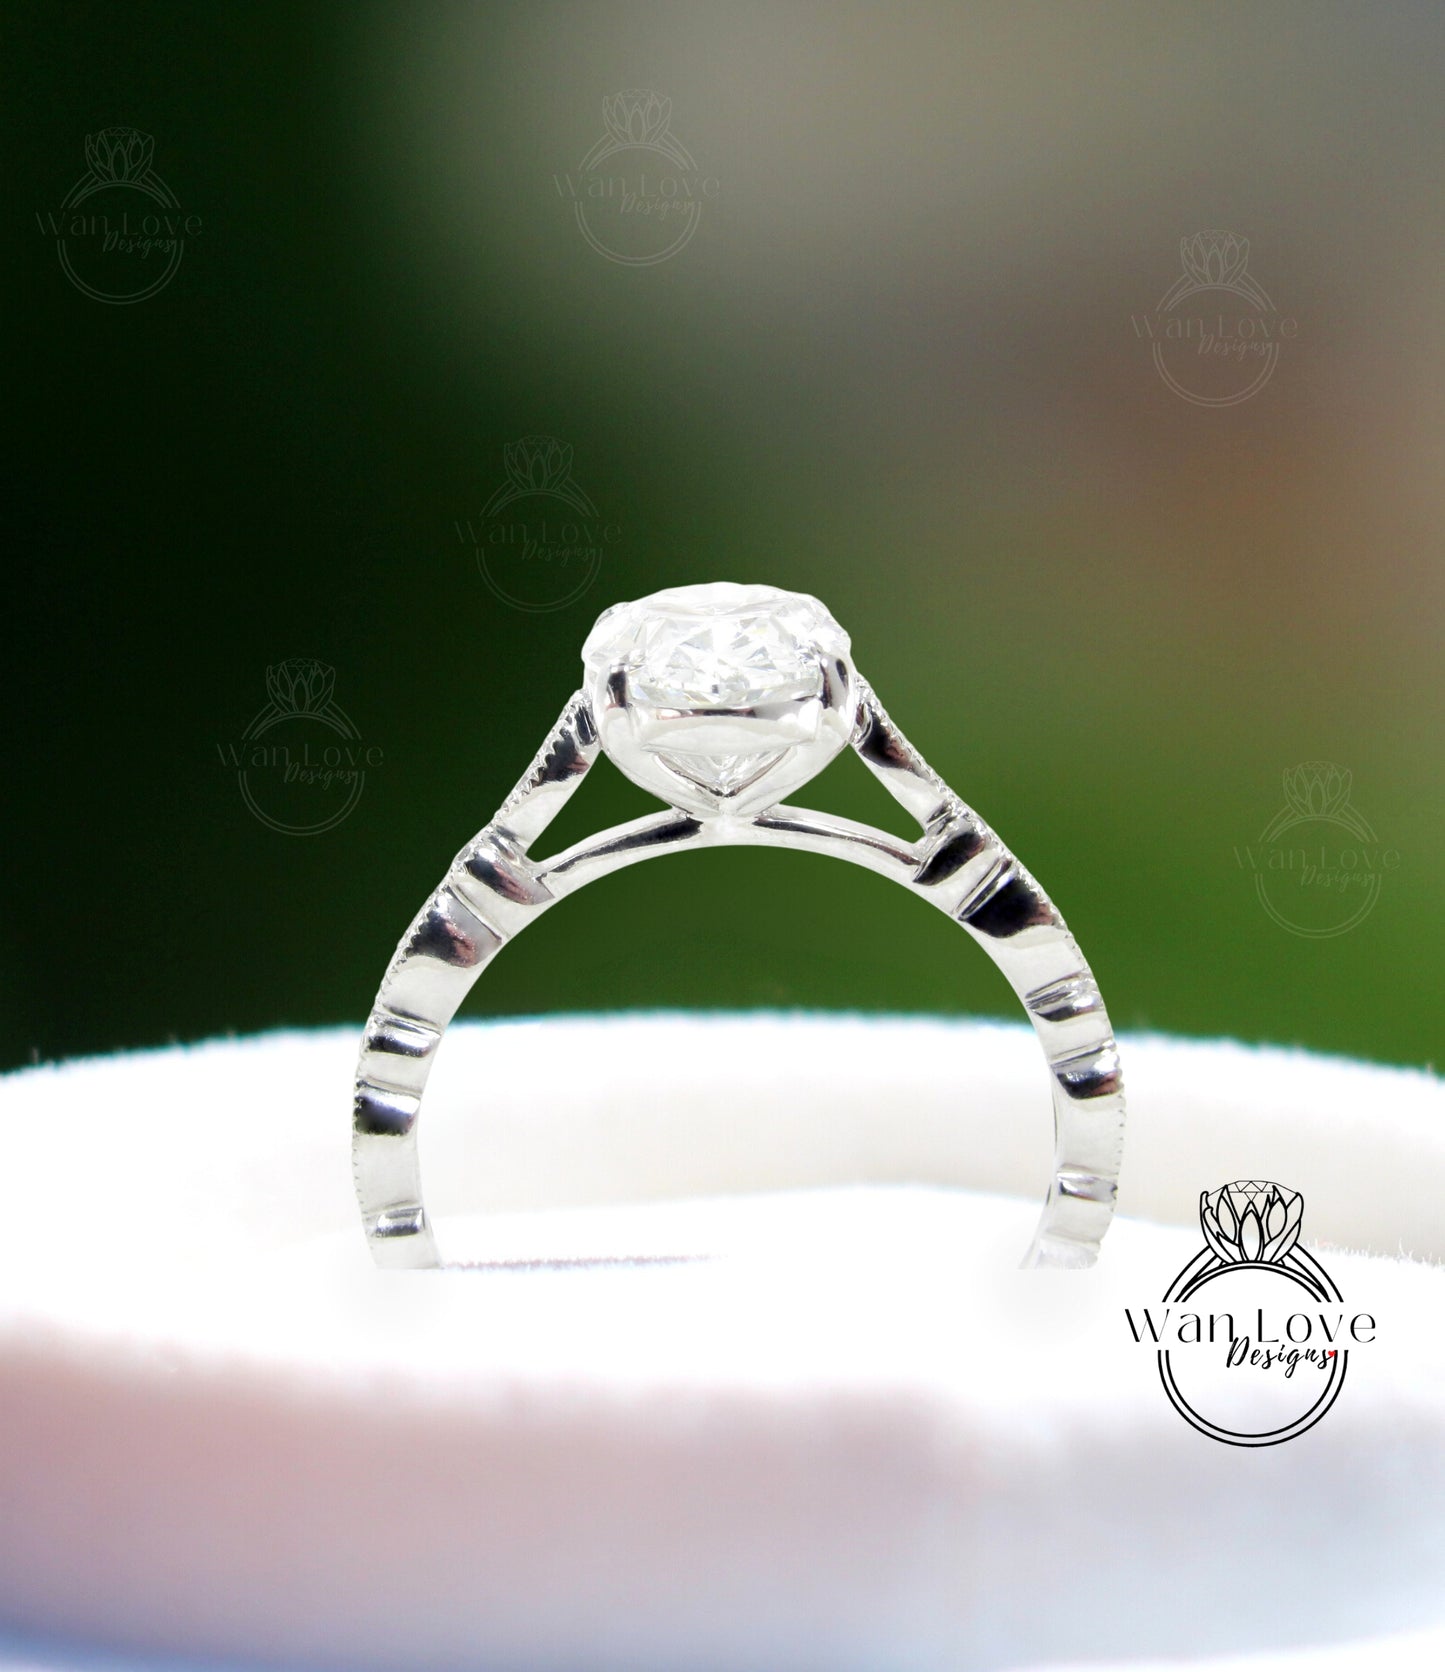 Vintage Oval cut Black Spinel engagement ring Rose gold ring Art deco Diamond Milgrain antique wedding Bridal Anniversary ring promise ring